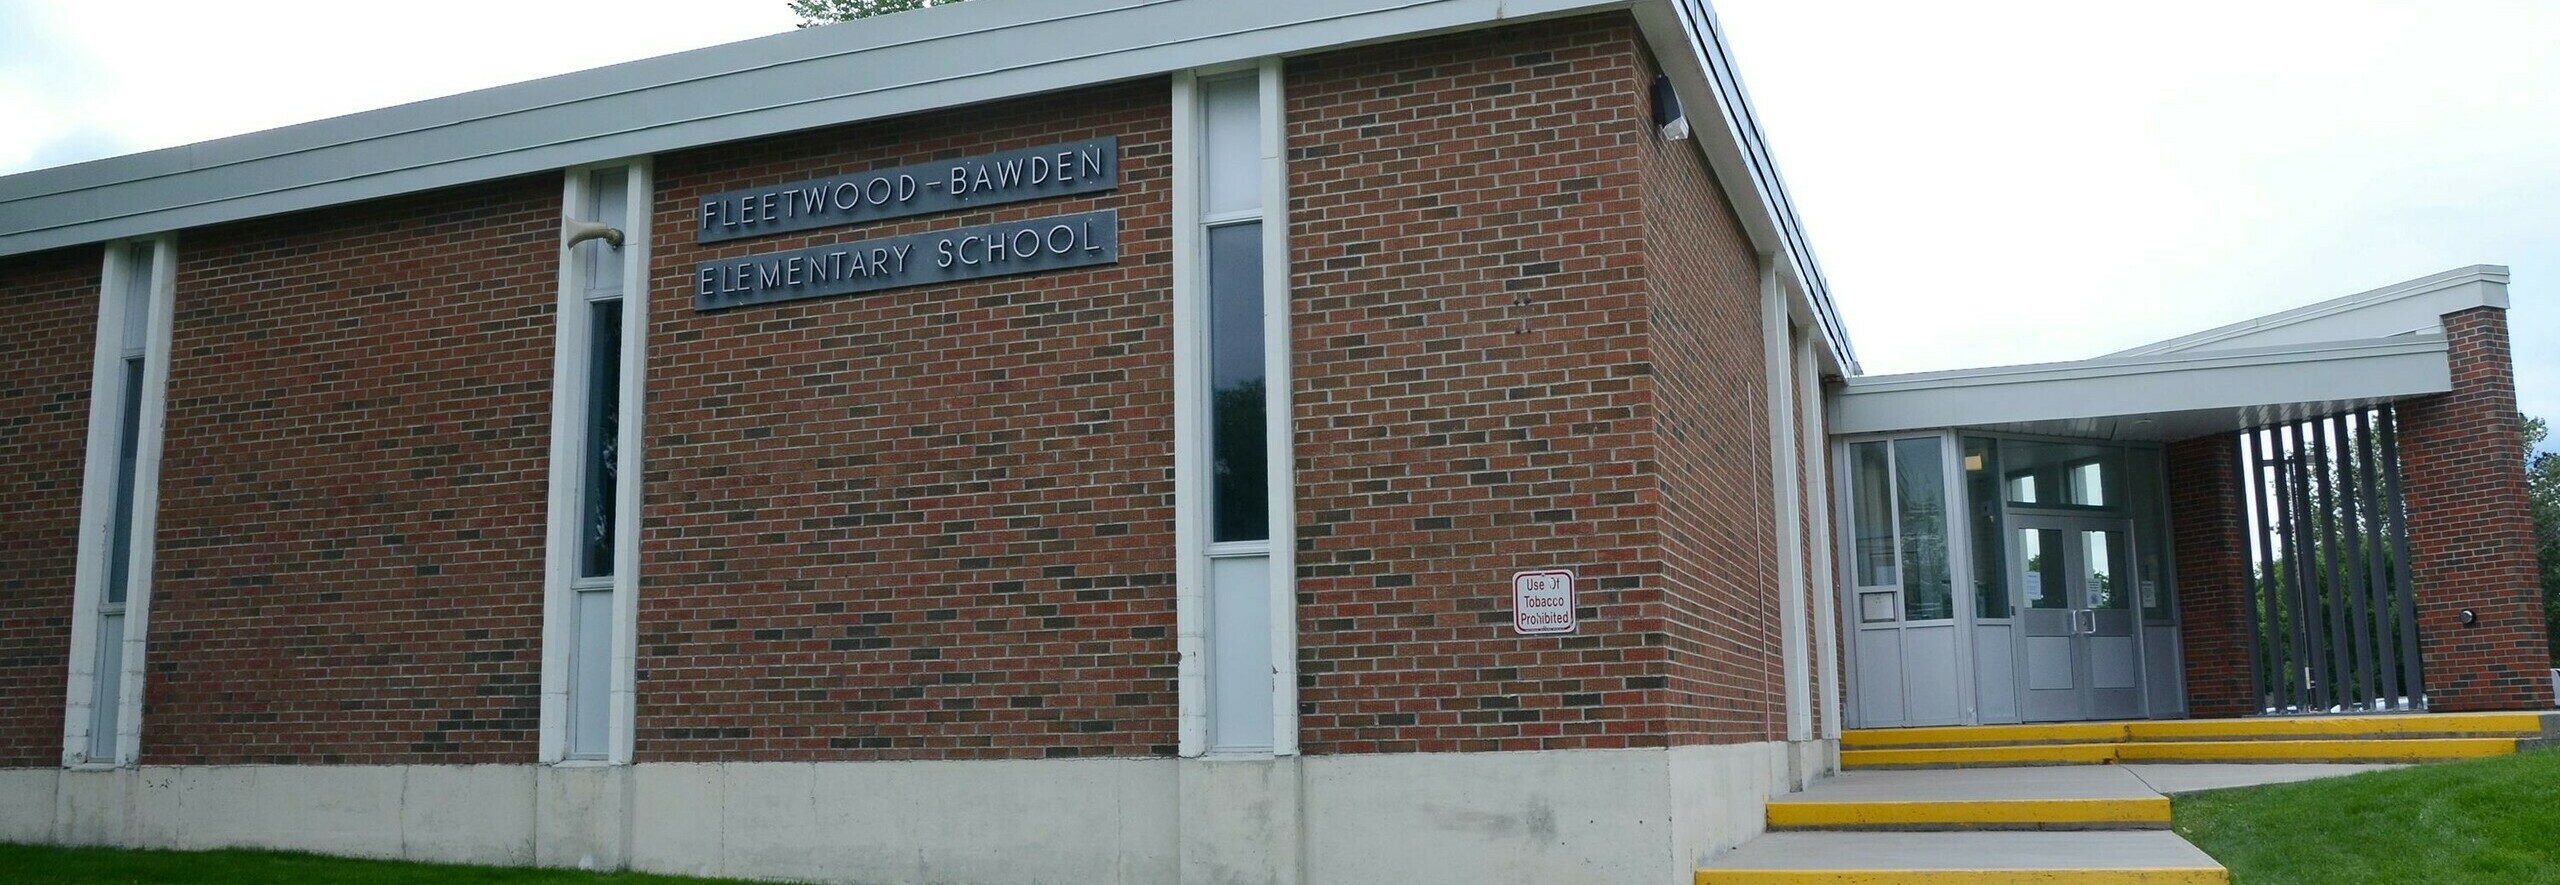 Fleetwood-Bawden Elementary School Banner Photo